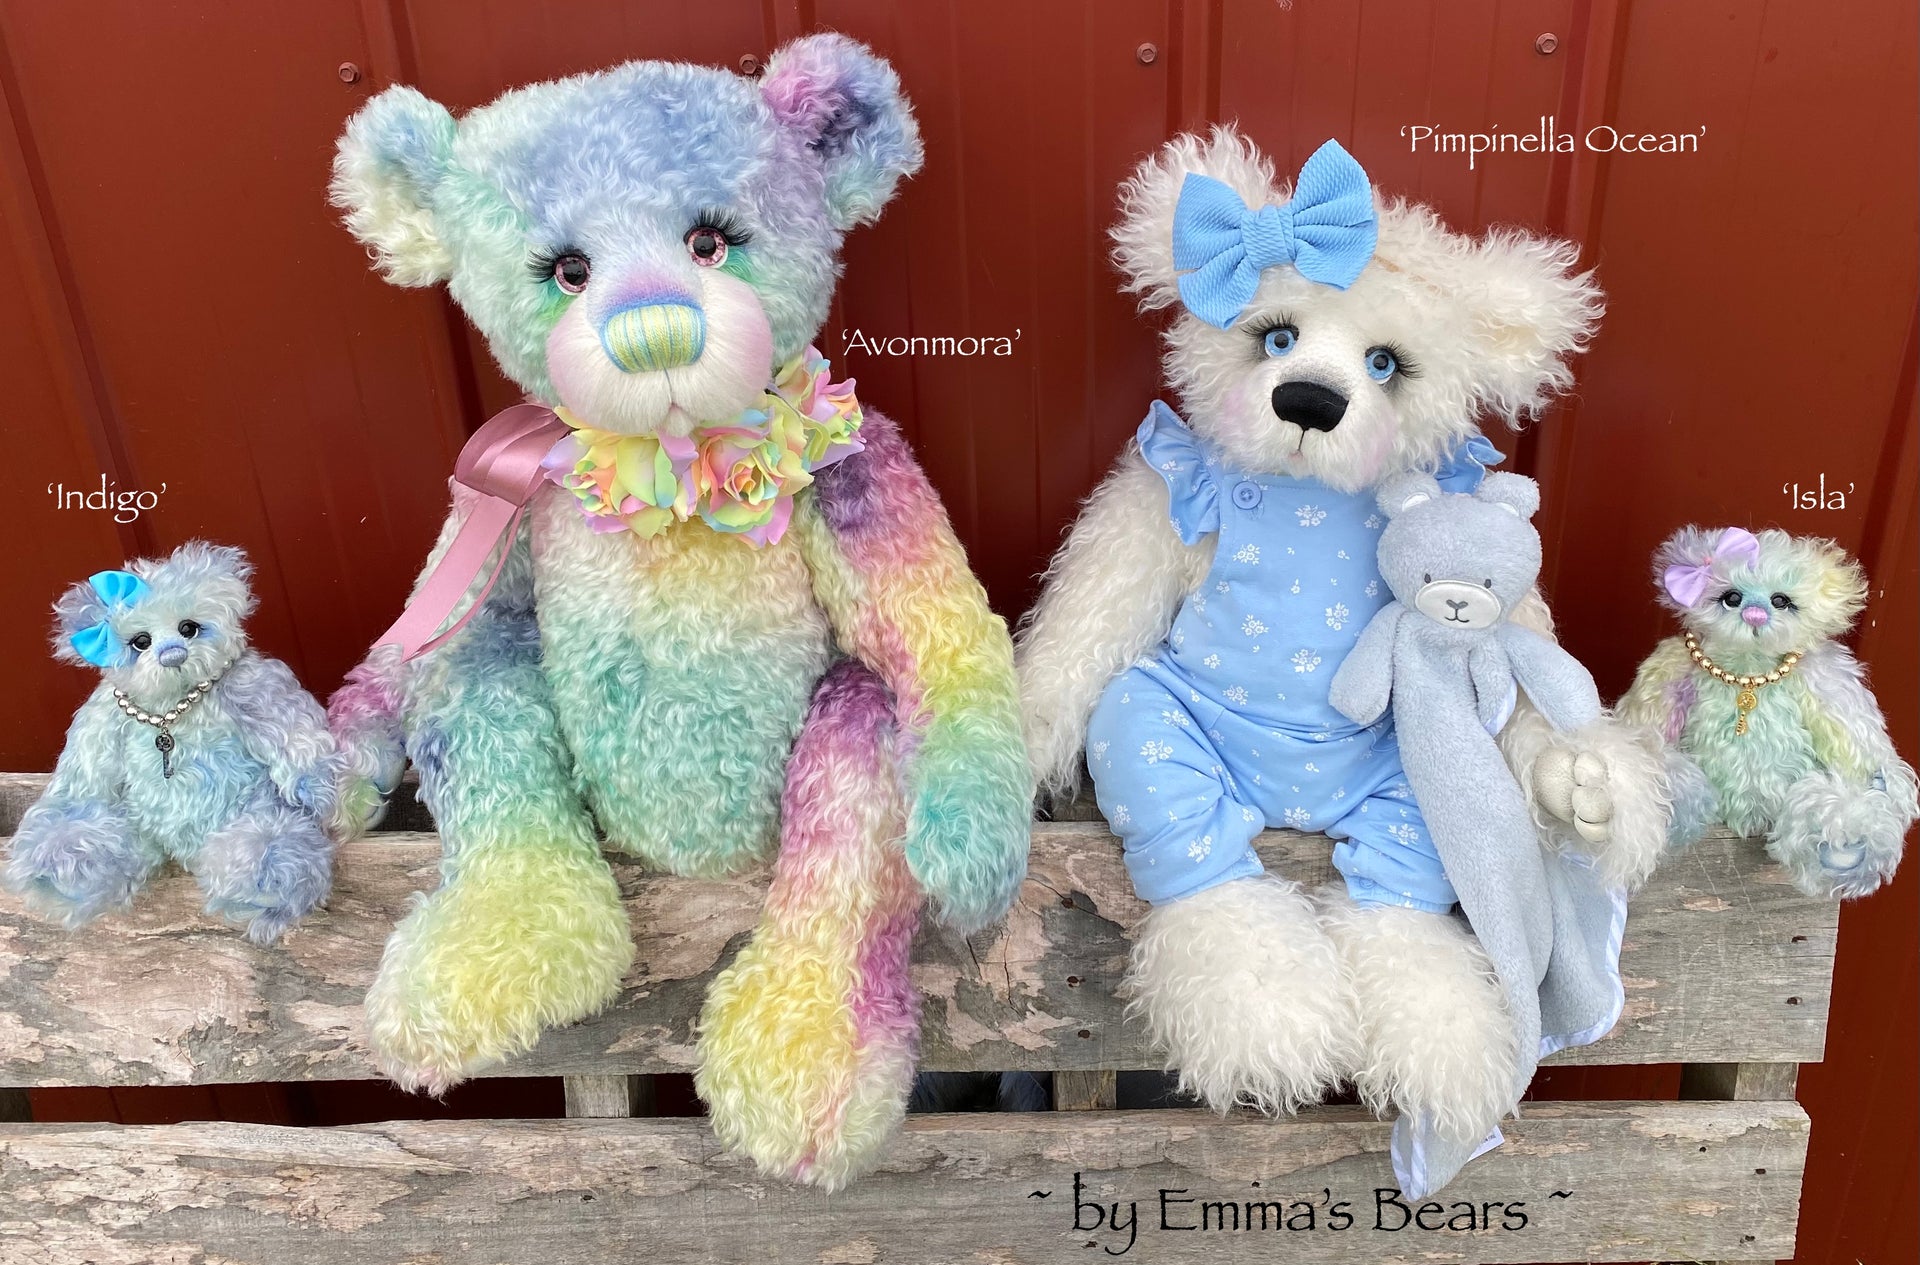 Avonmora - 23" Hand Dyed Curly Kid Mohair Artist Bear by Emma's Bears - OOAK